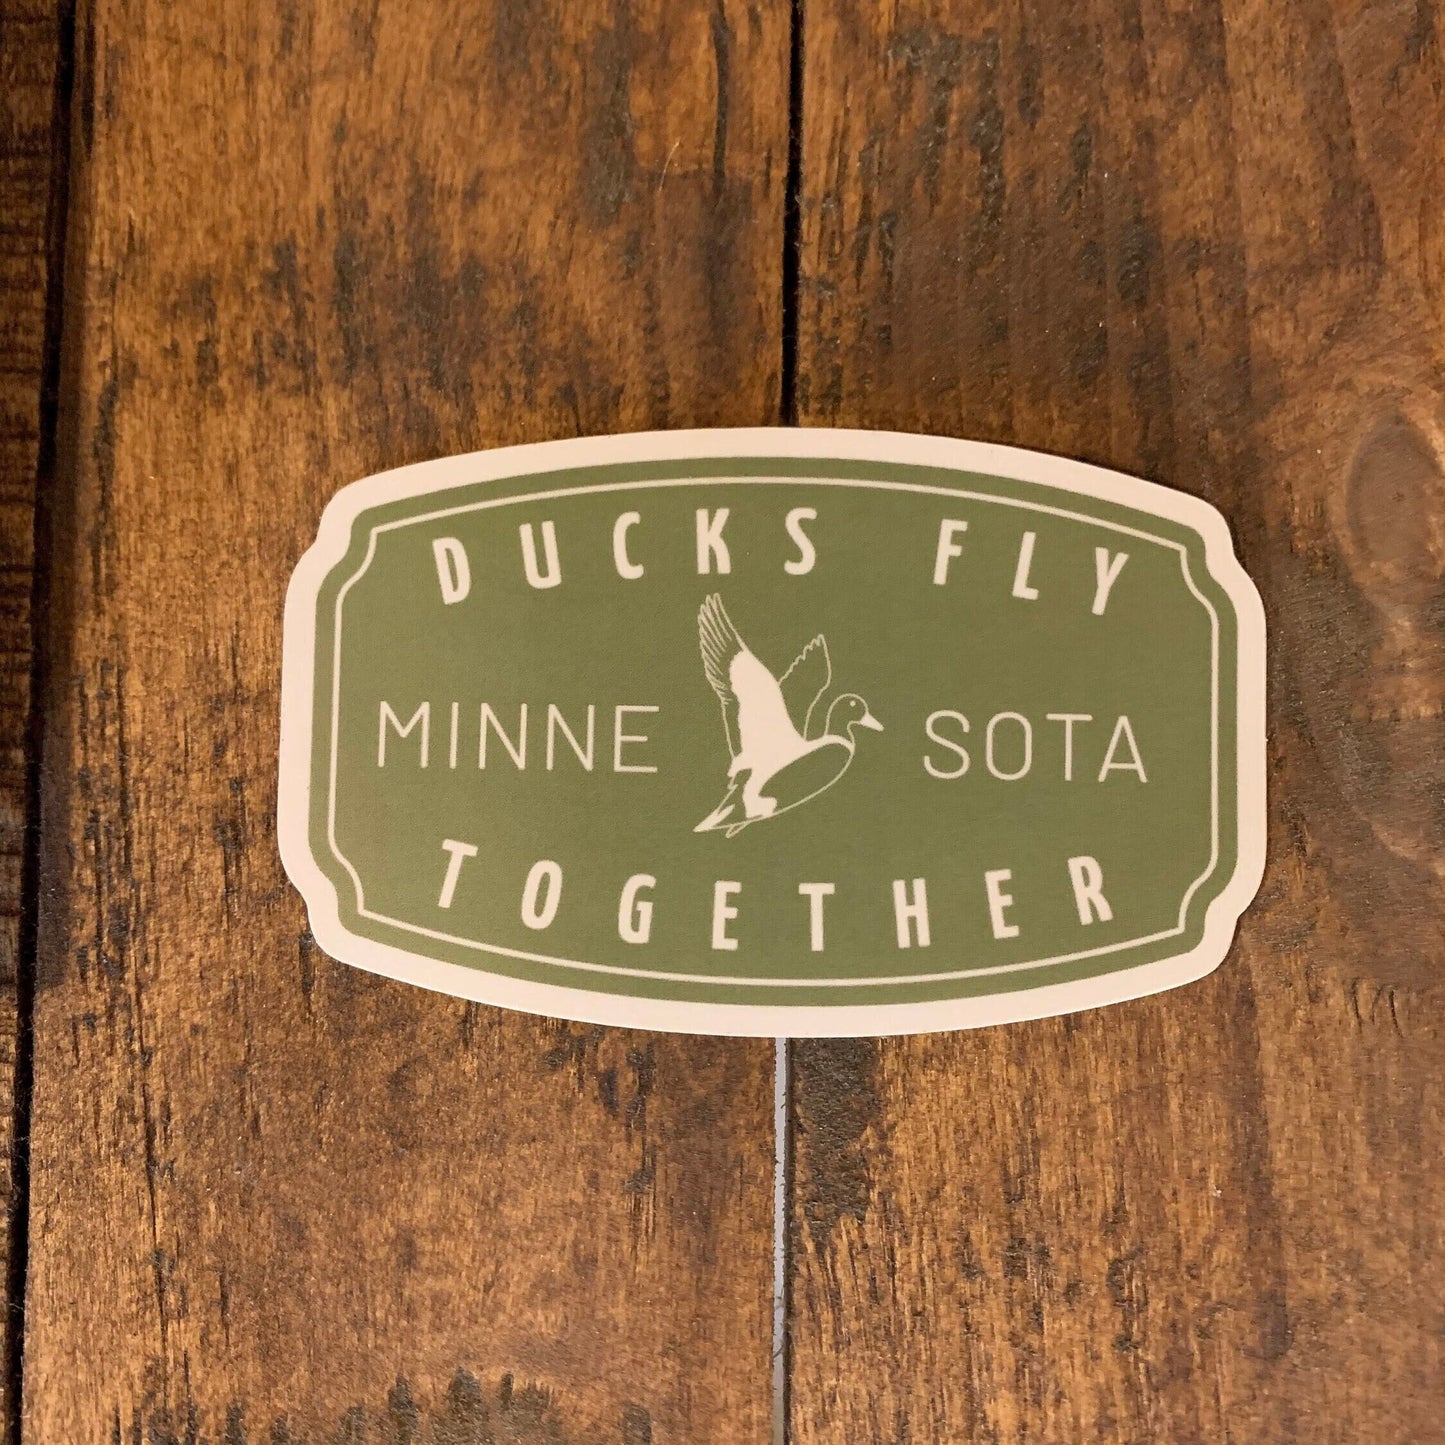 Ducks Fly Together Sticker